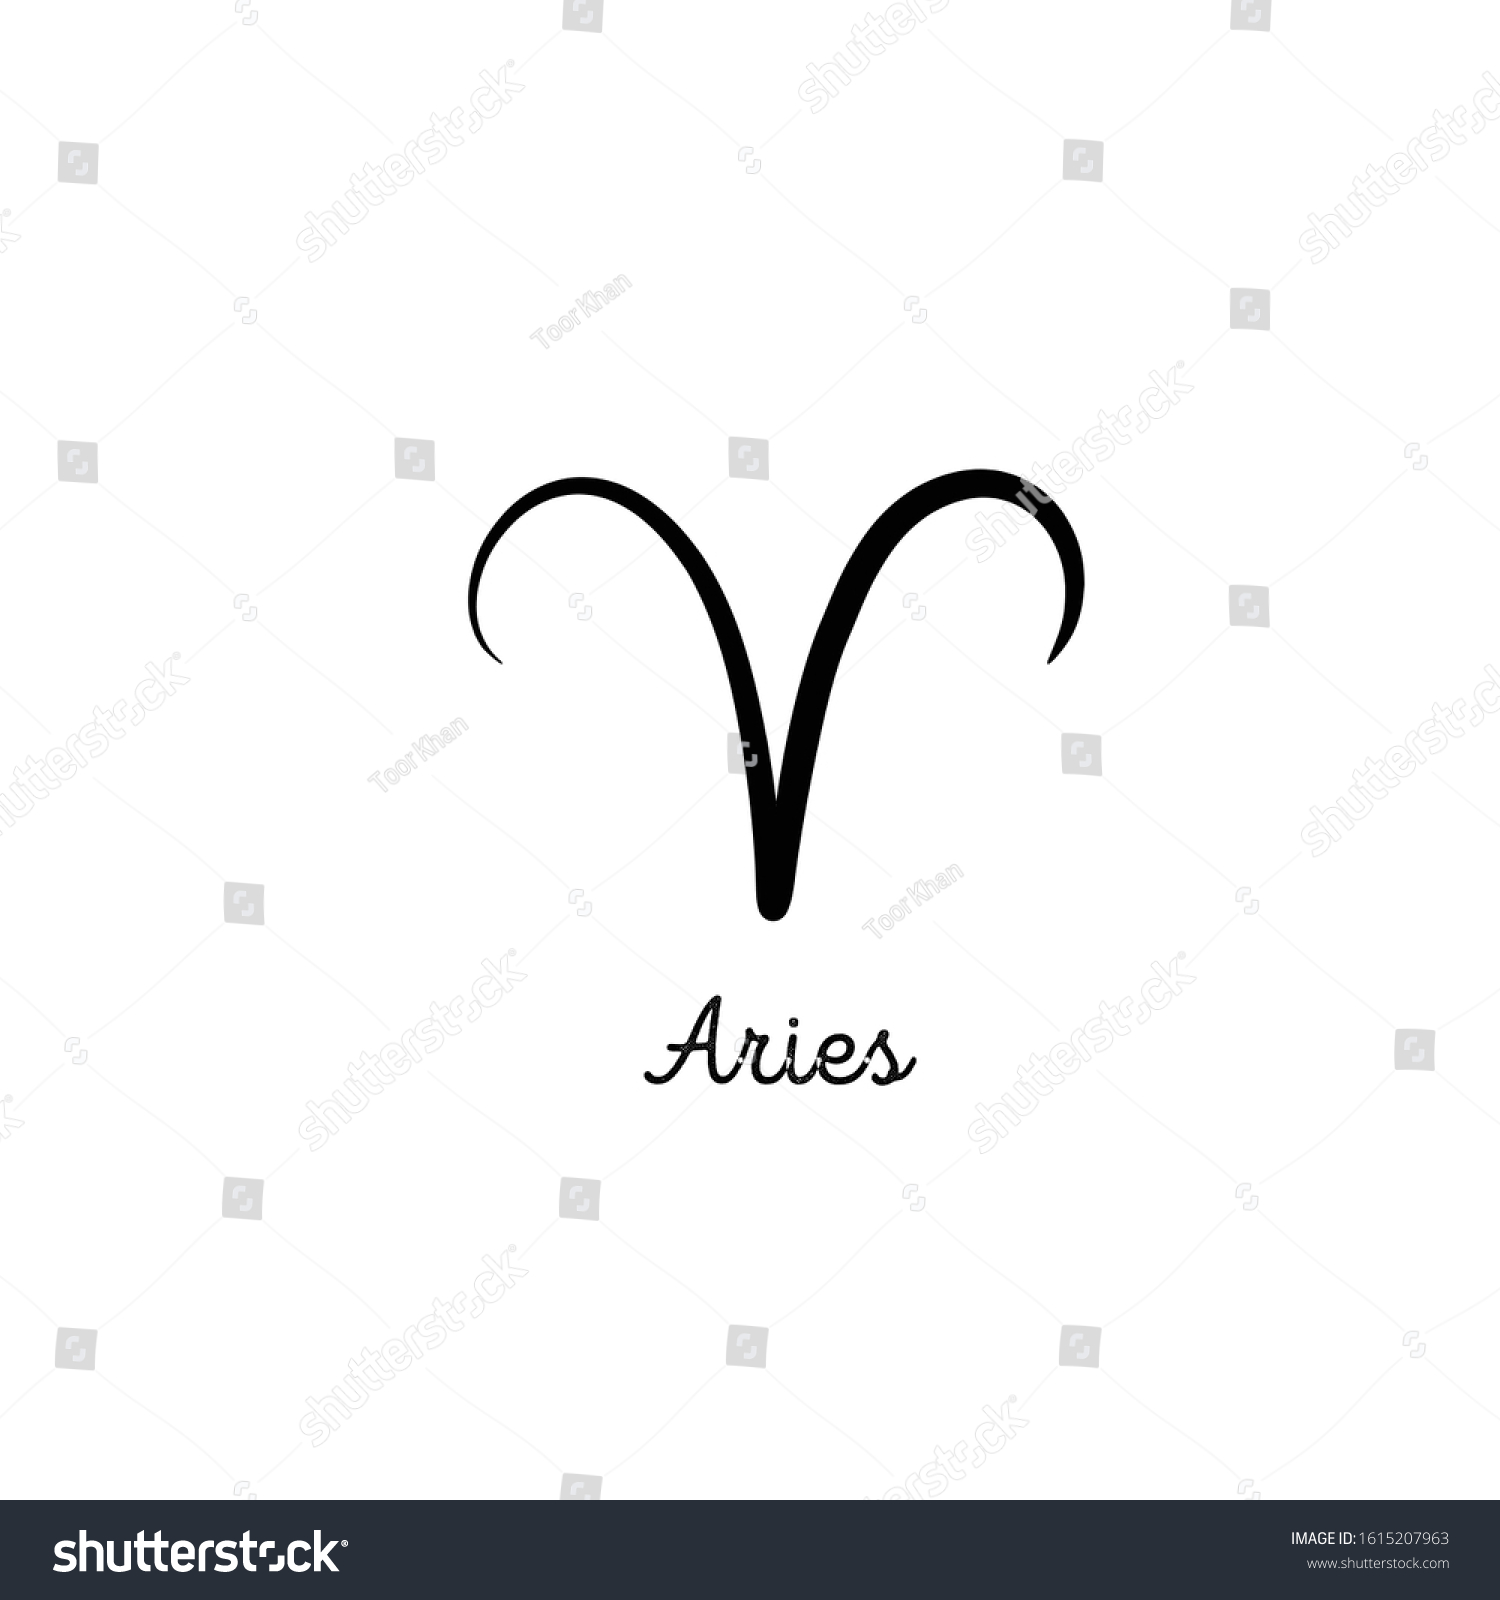 Aries symbol Images, Stock Photos & Vectors | Shutterstock